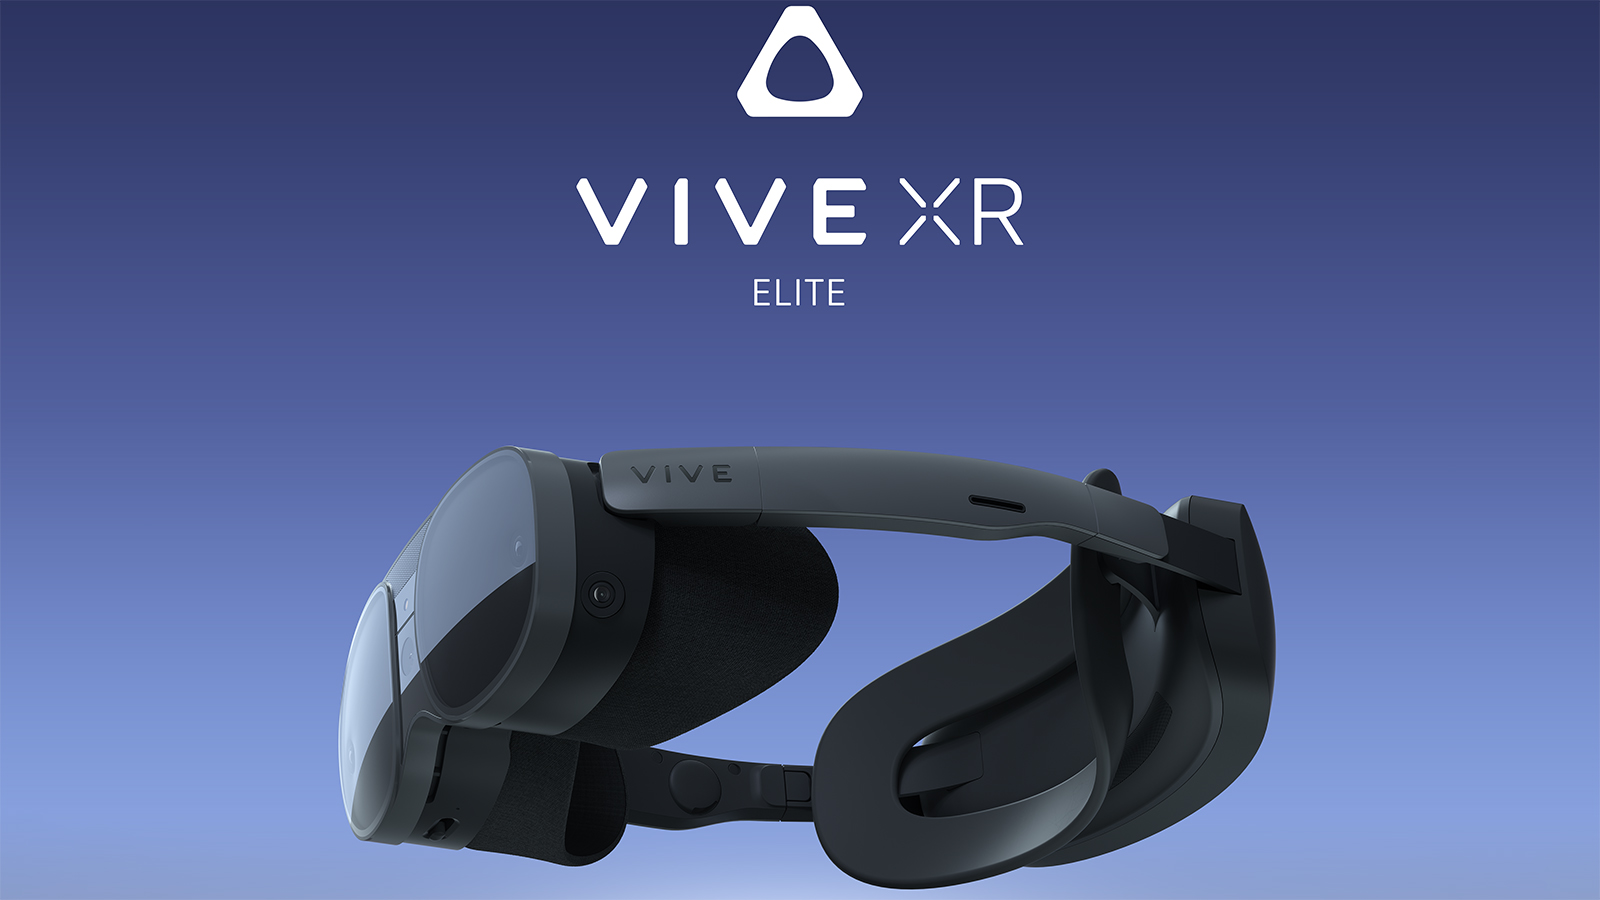 HTC's battery-powered VIVE XR Elite headset